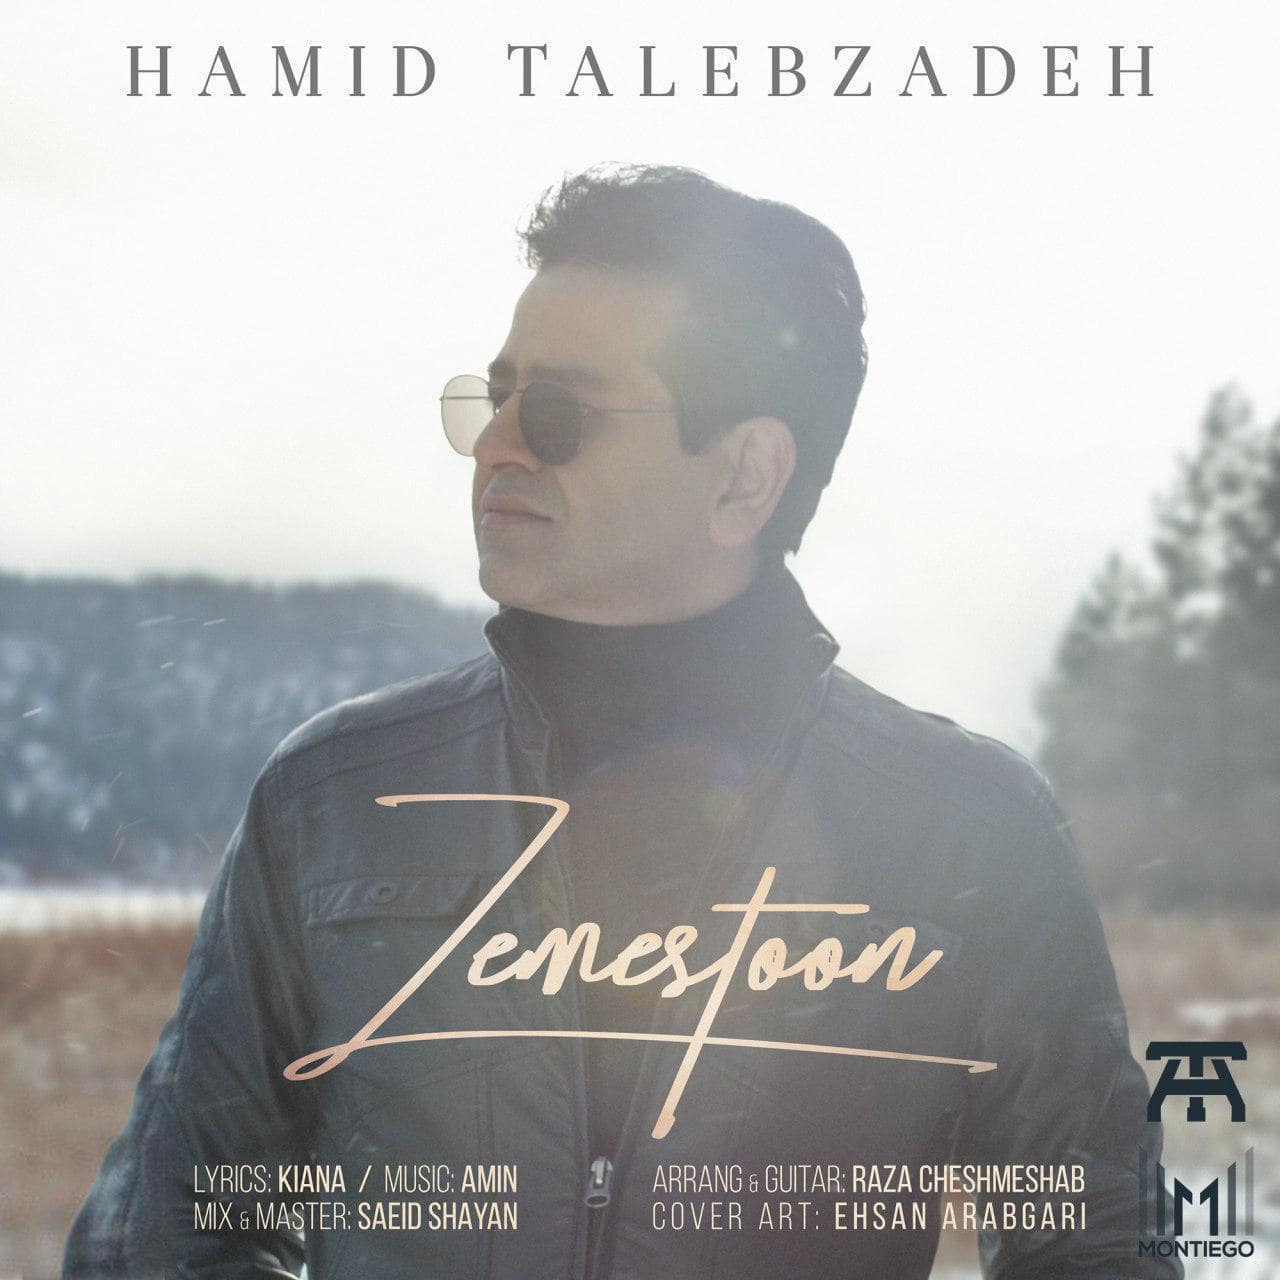 Hamid Talebzadeh Zemestoon 